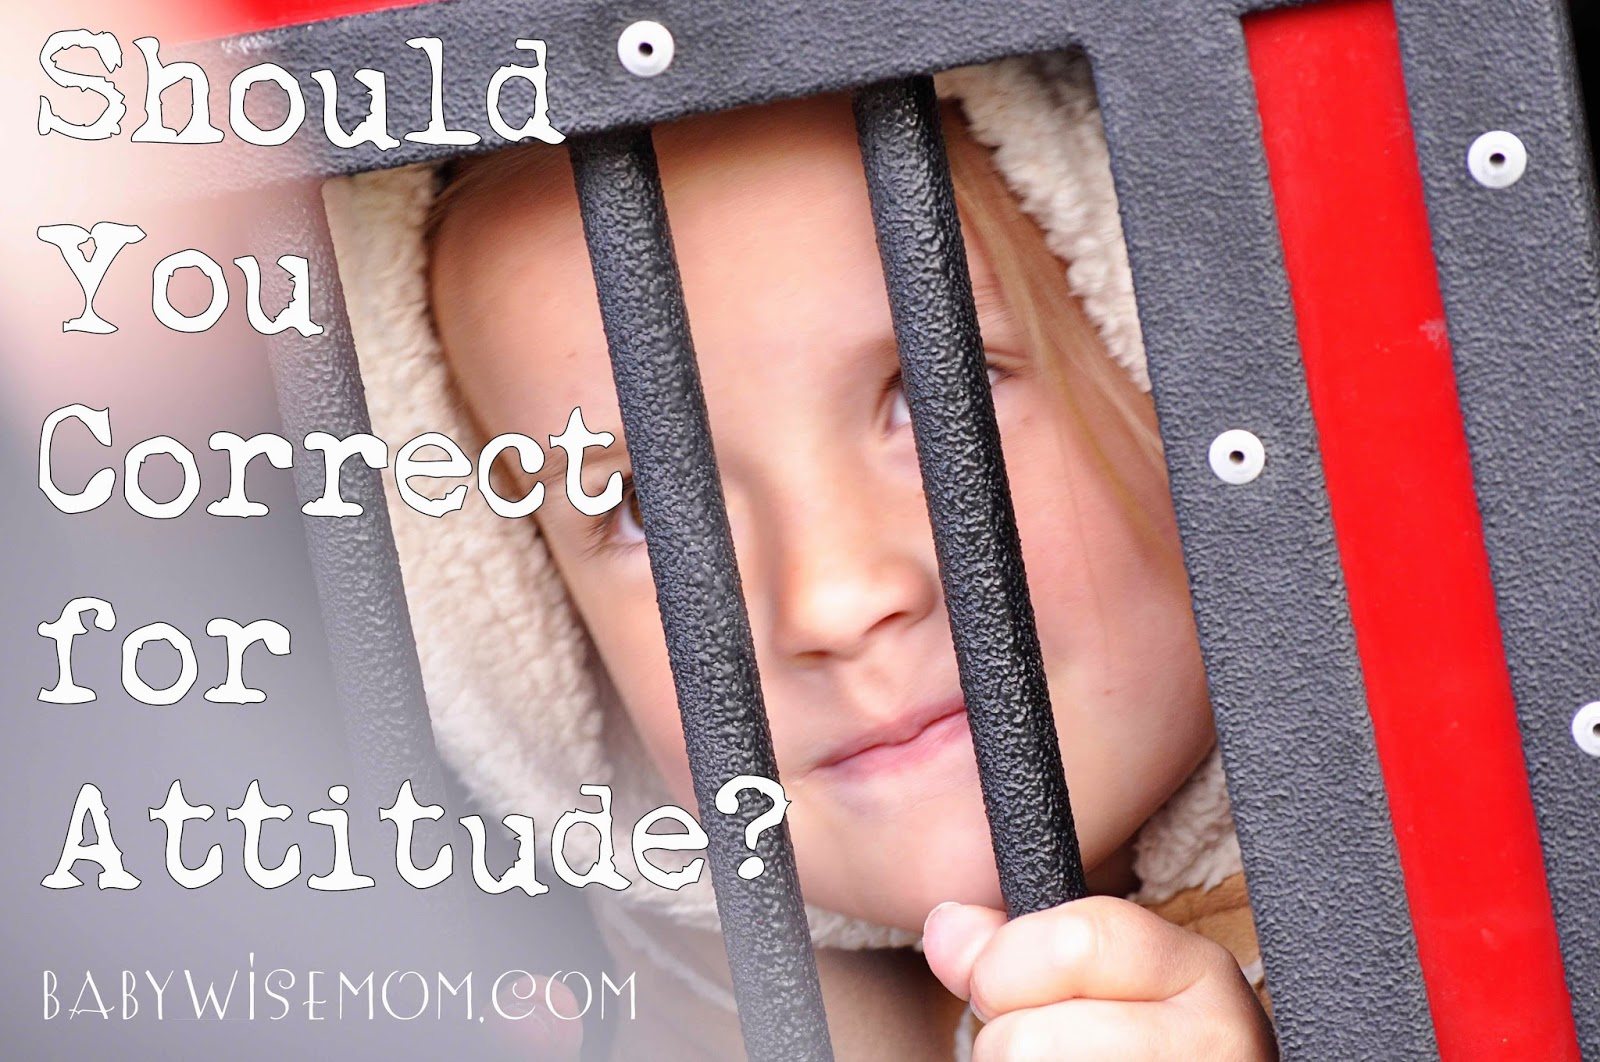 Should You Correct for Attitude?